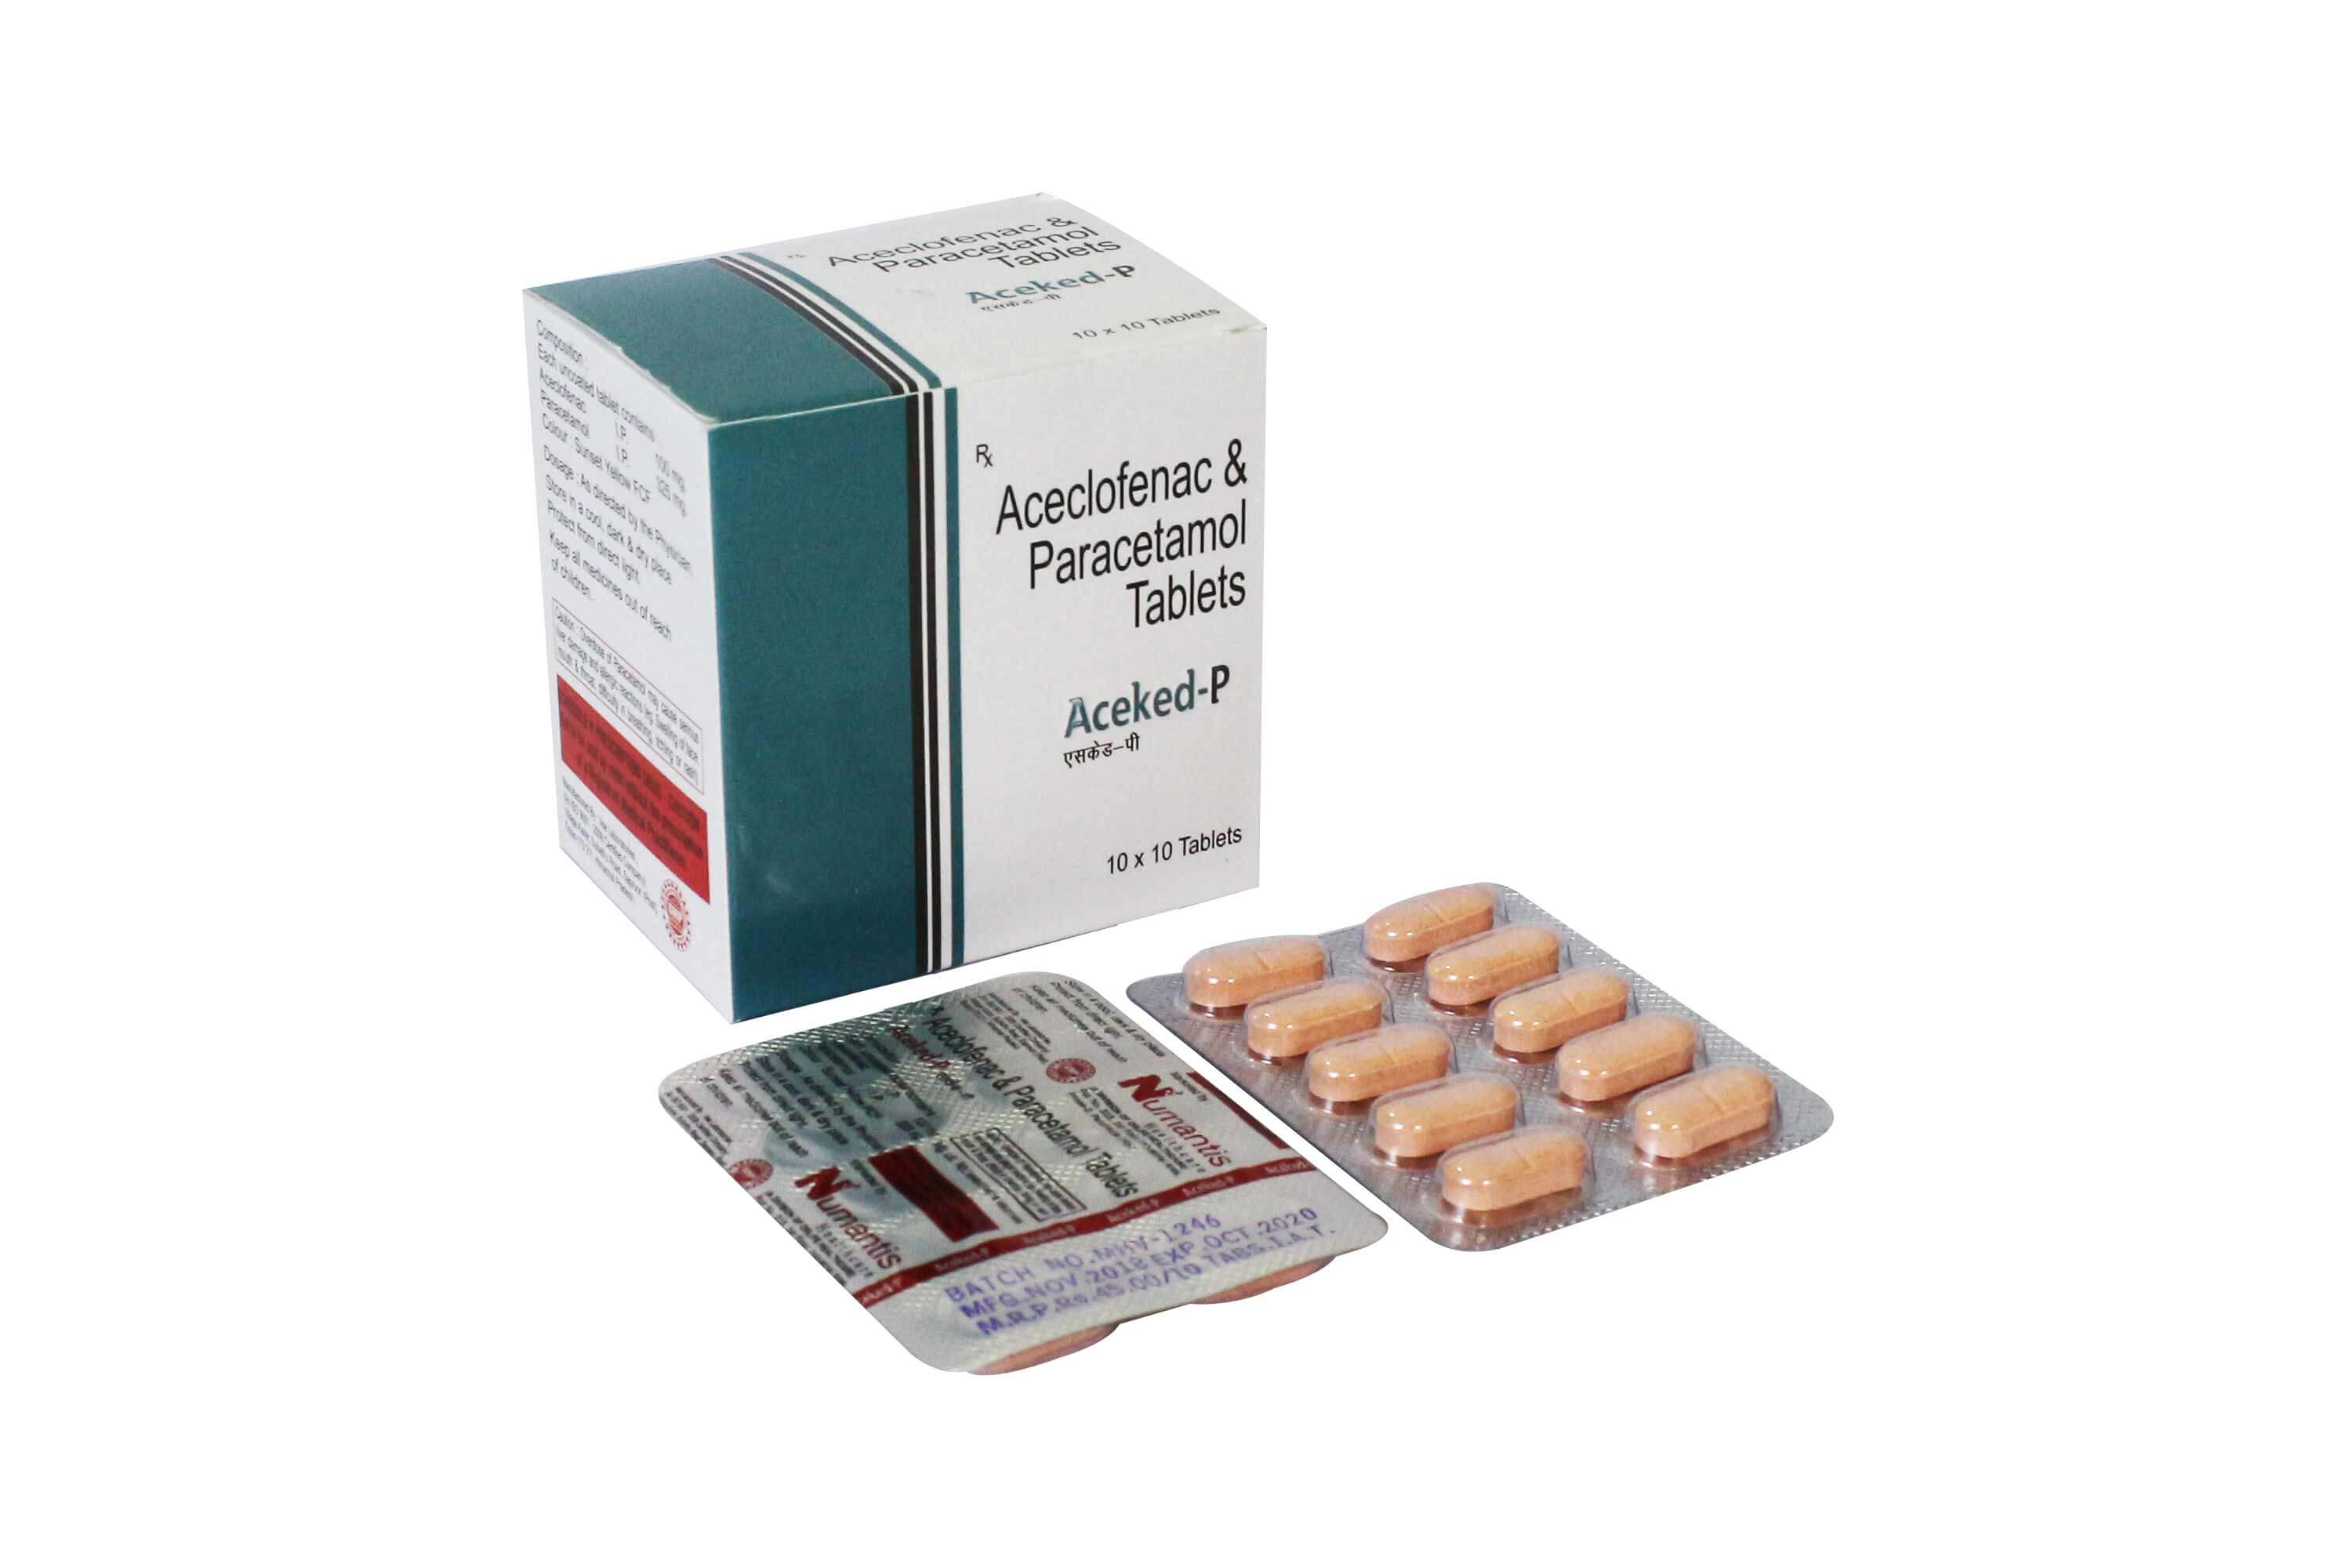 Product Name: Aceked P, Compositions of Aceked P are Aeclofenac & Paracetamol Tablets - Numantis Healthcare